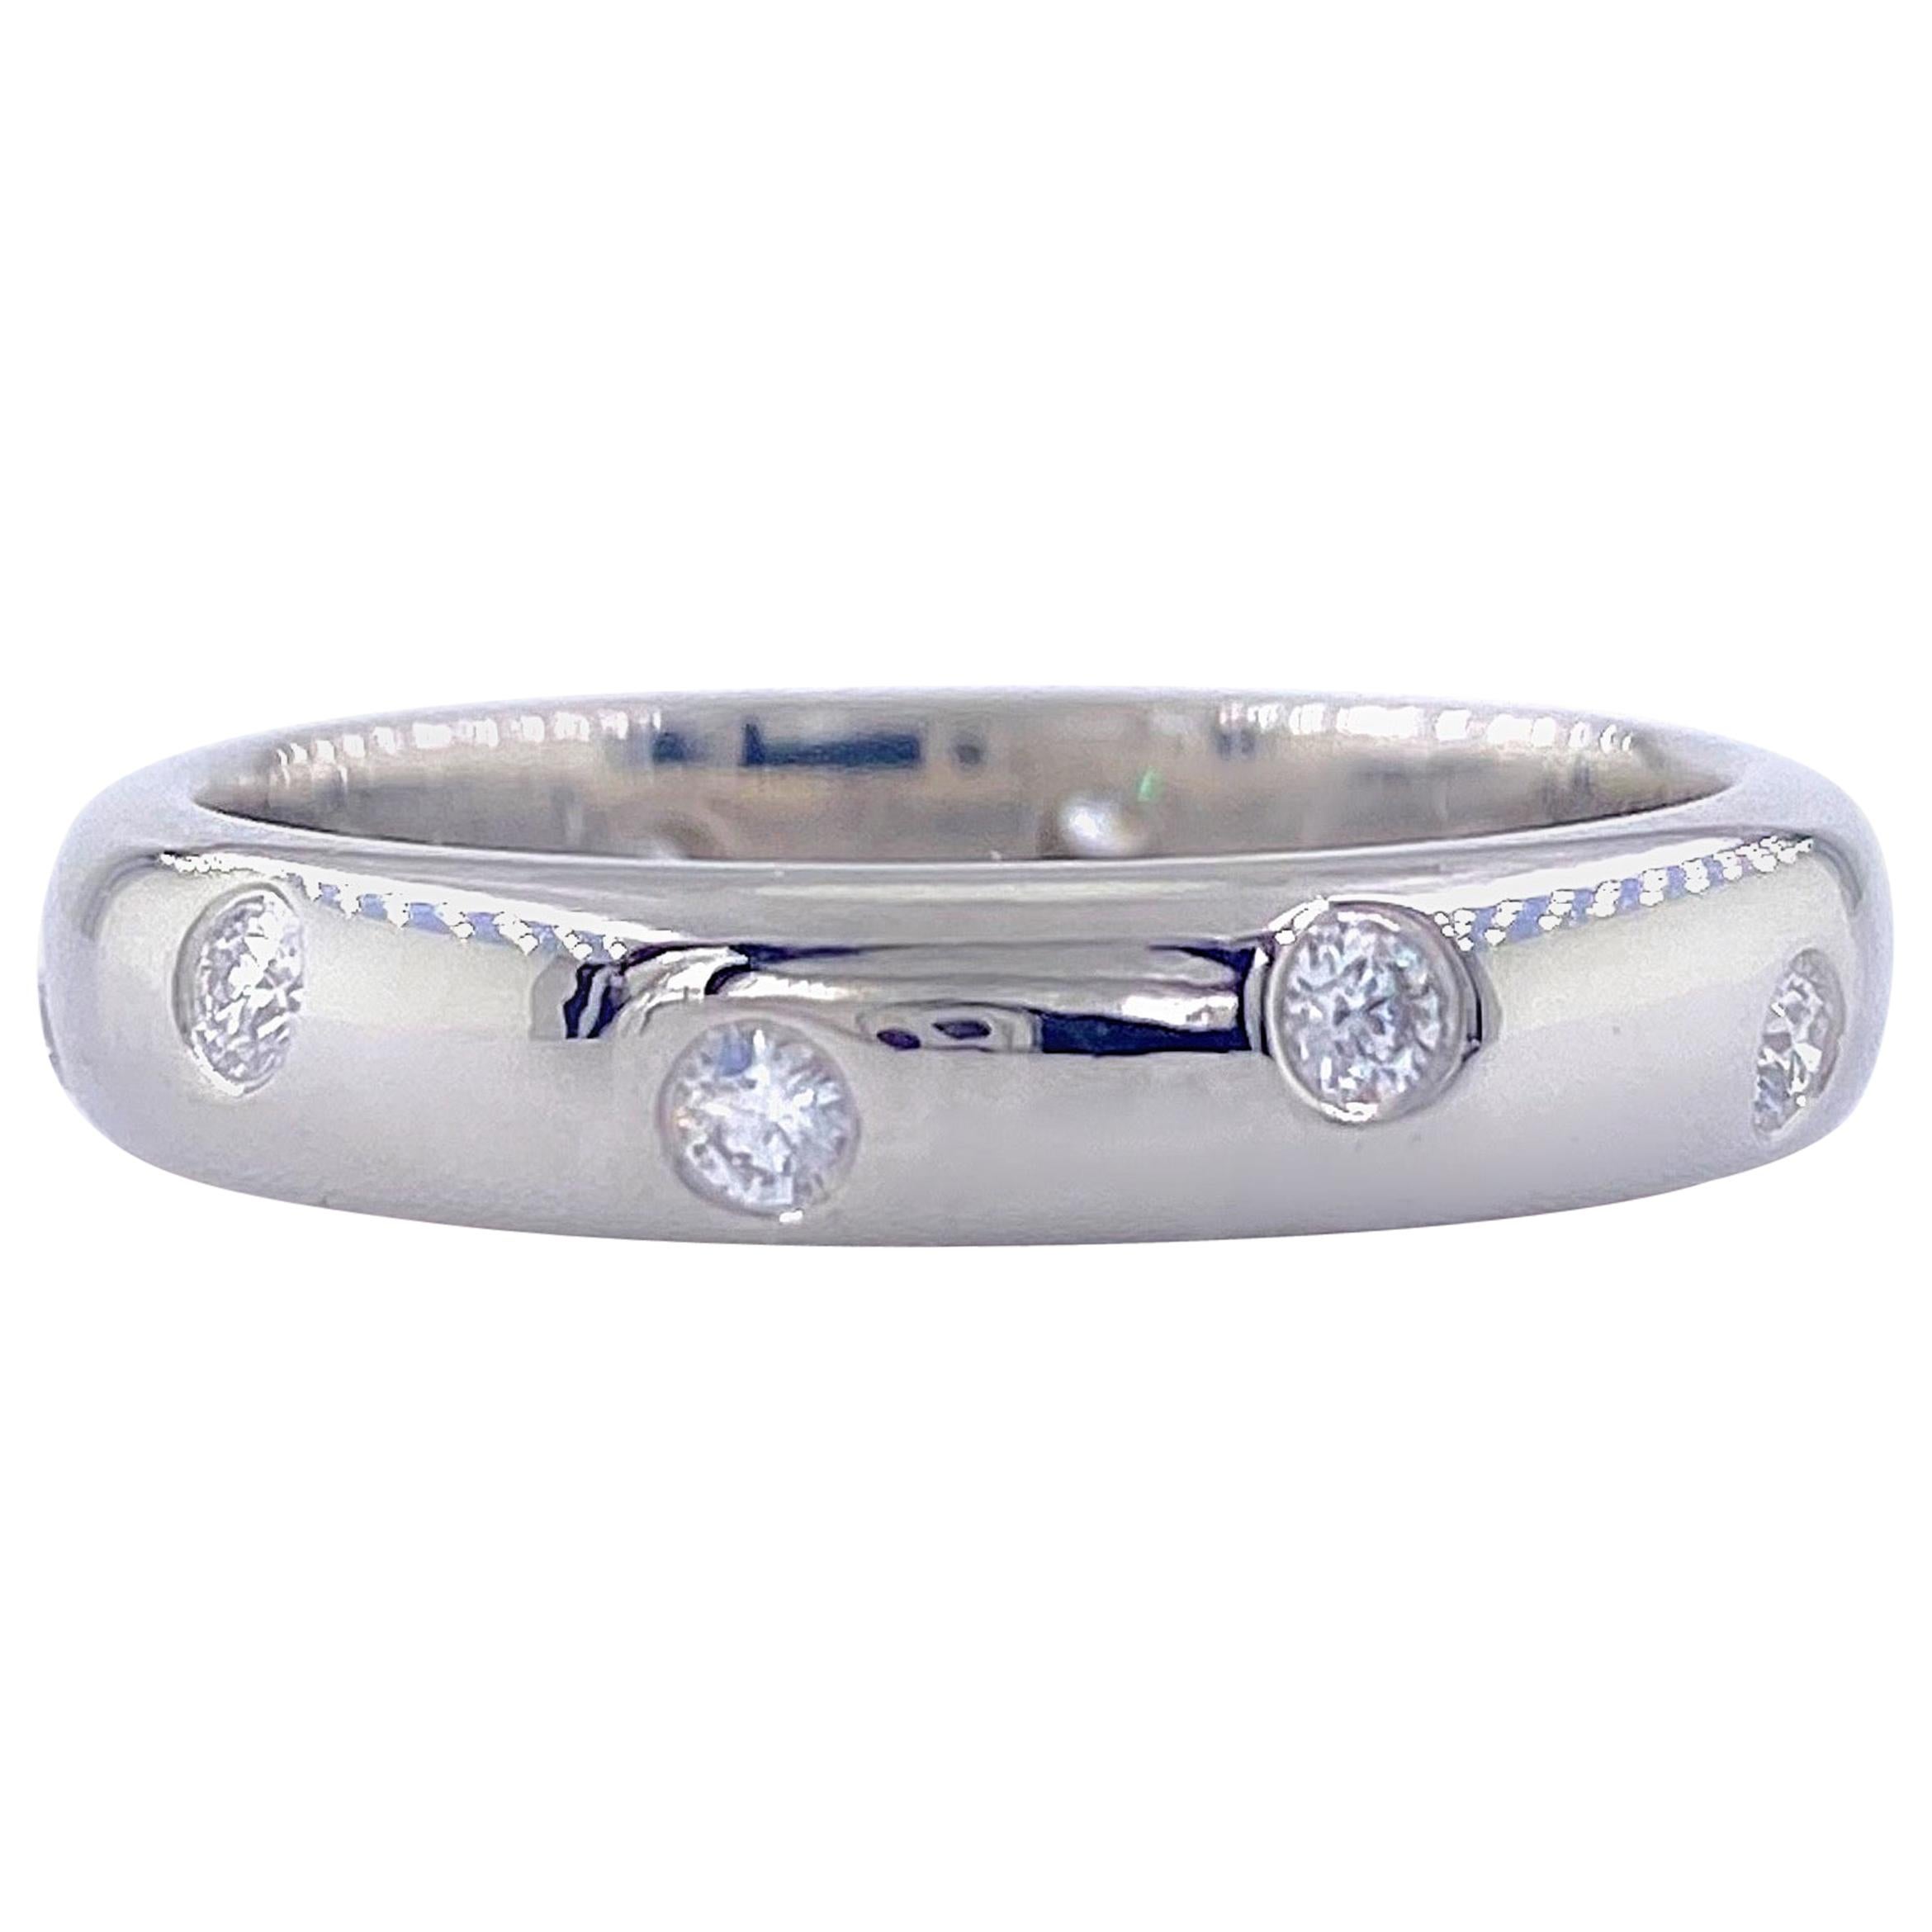 Authentic Tiffany & Co. Etoile Diamond Wedding Band Ring in Platinum